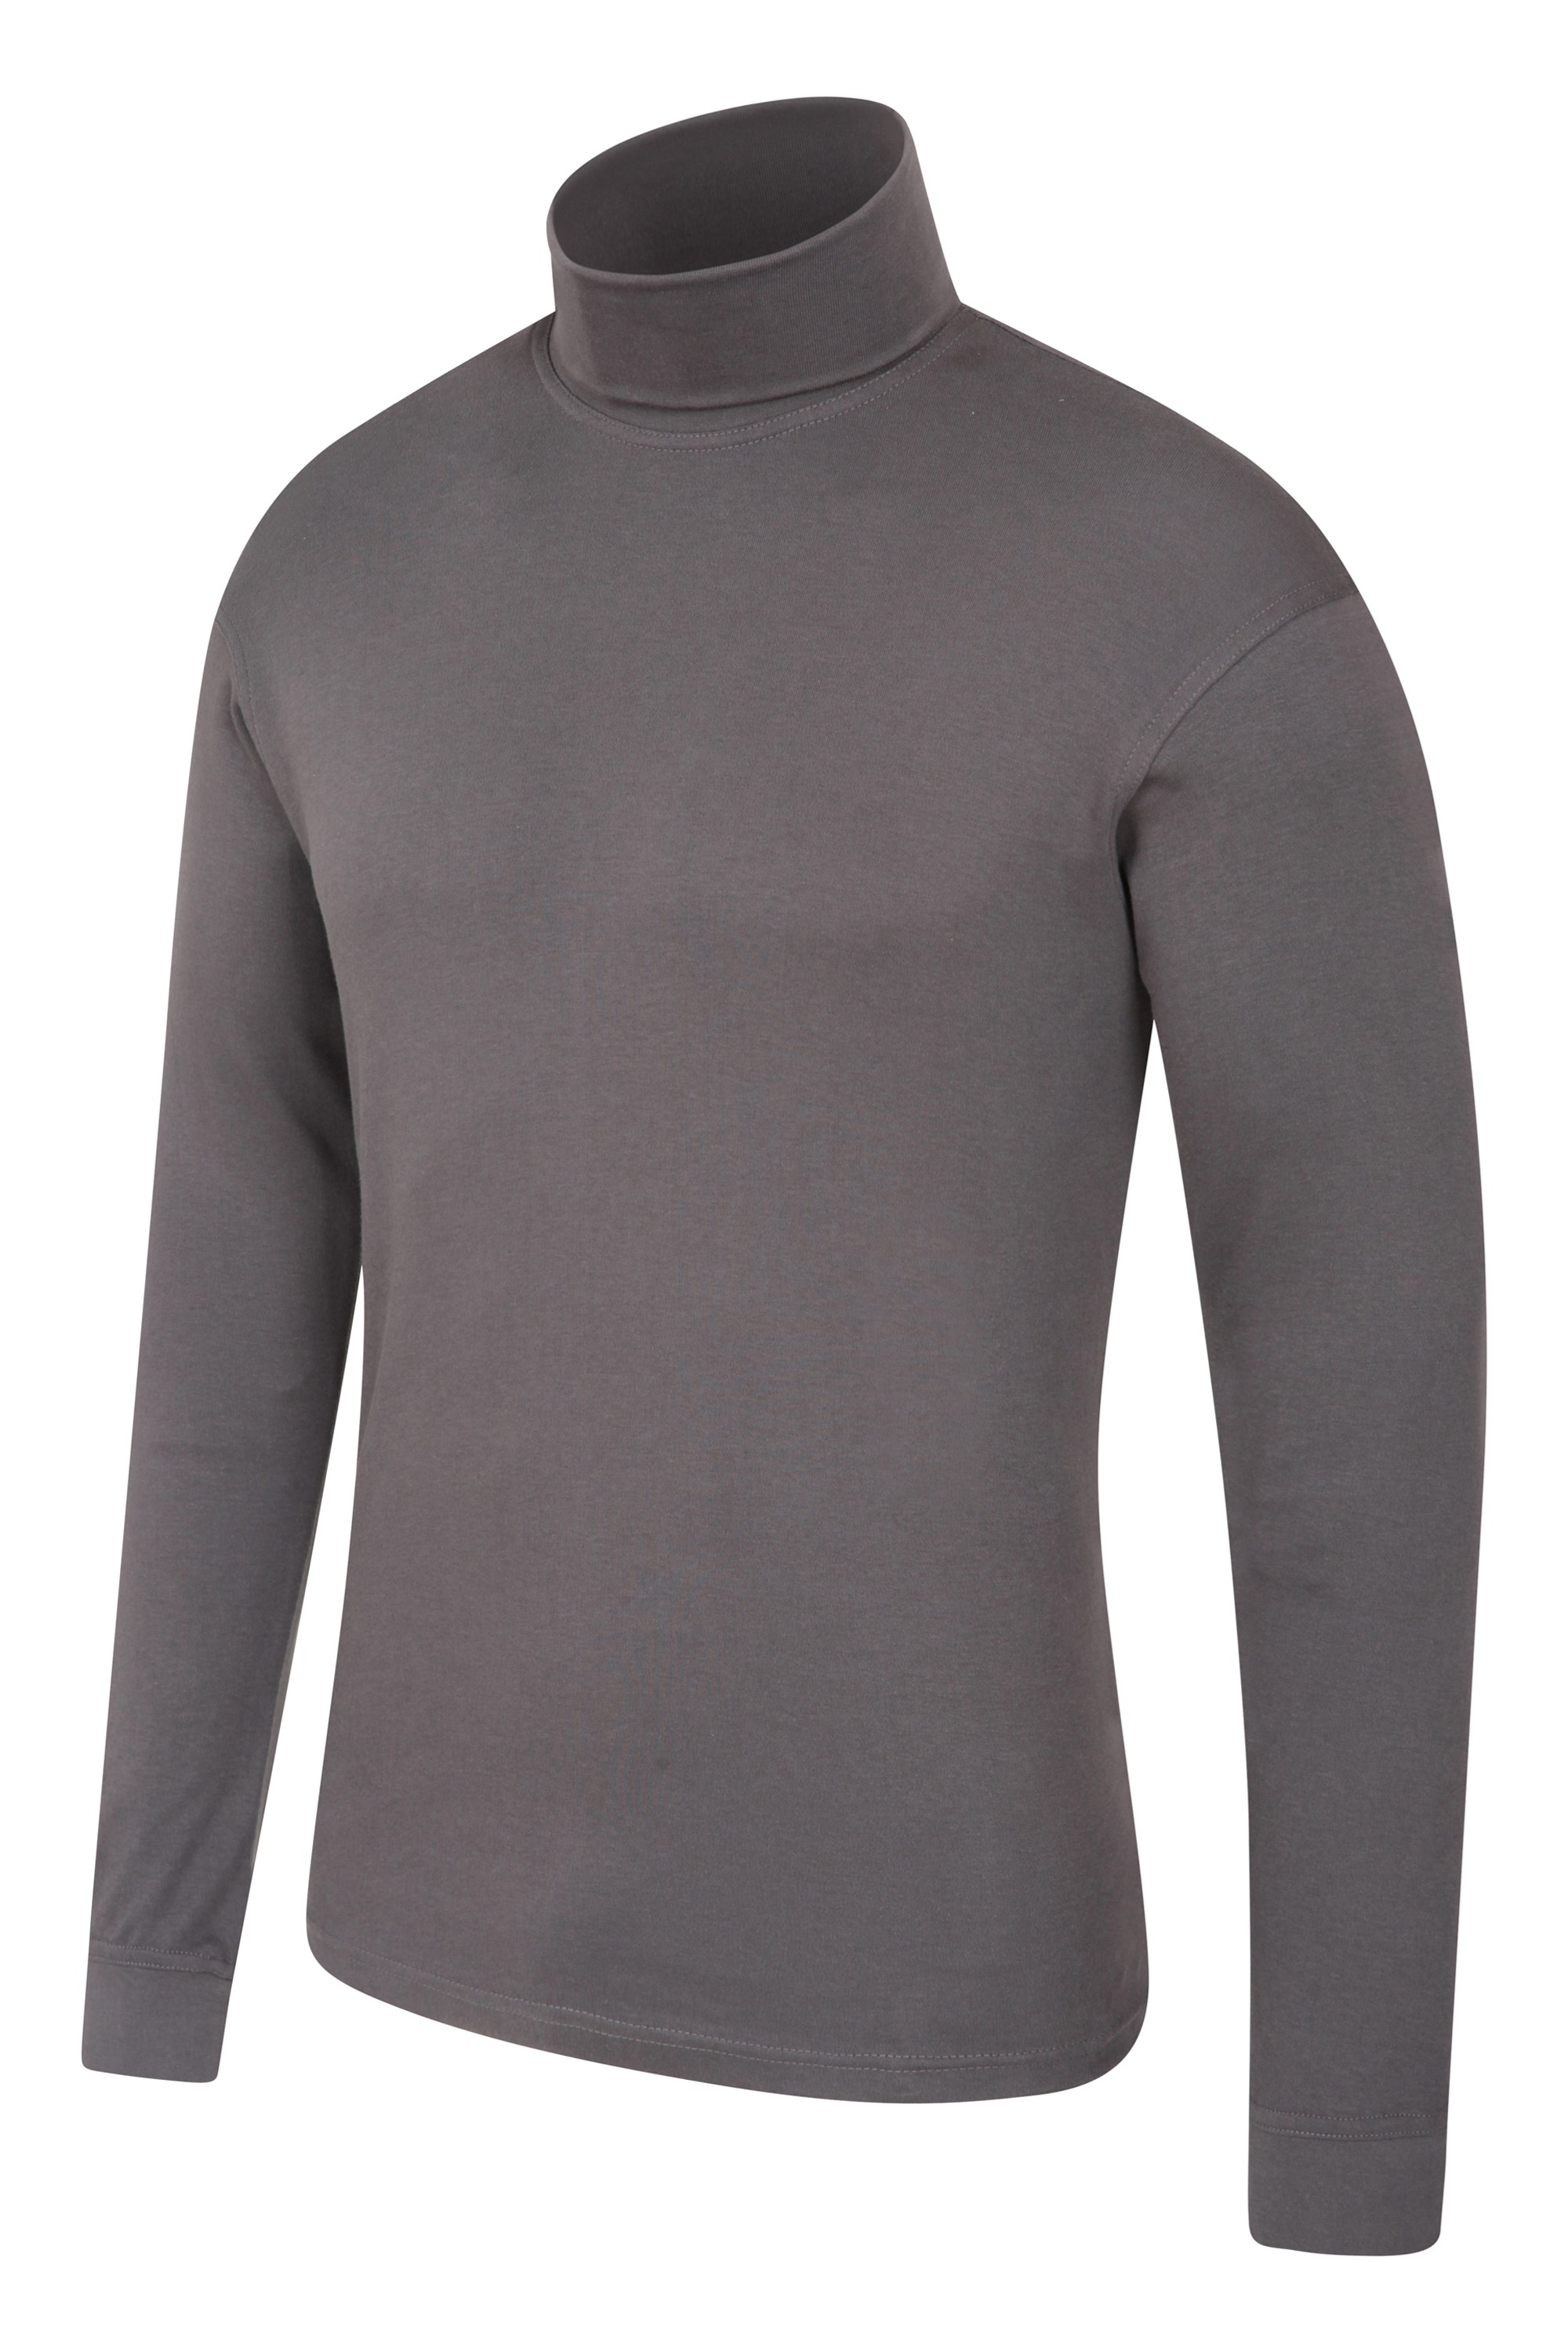 Mens Roll Neck Thermal Underwear Baselayer T Shirt Top Winter Warm Colour:Black Size:Medium